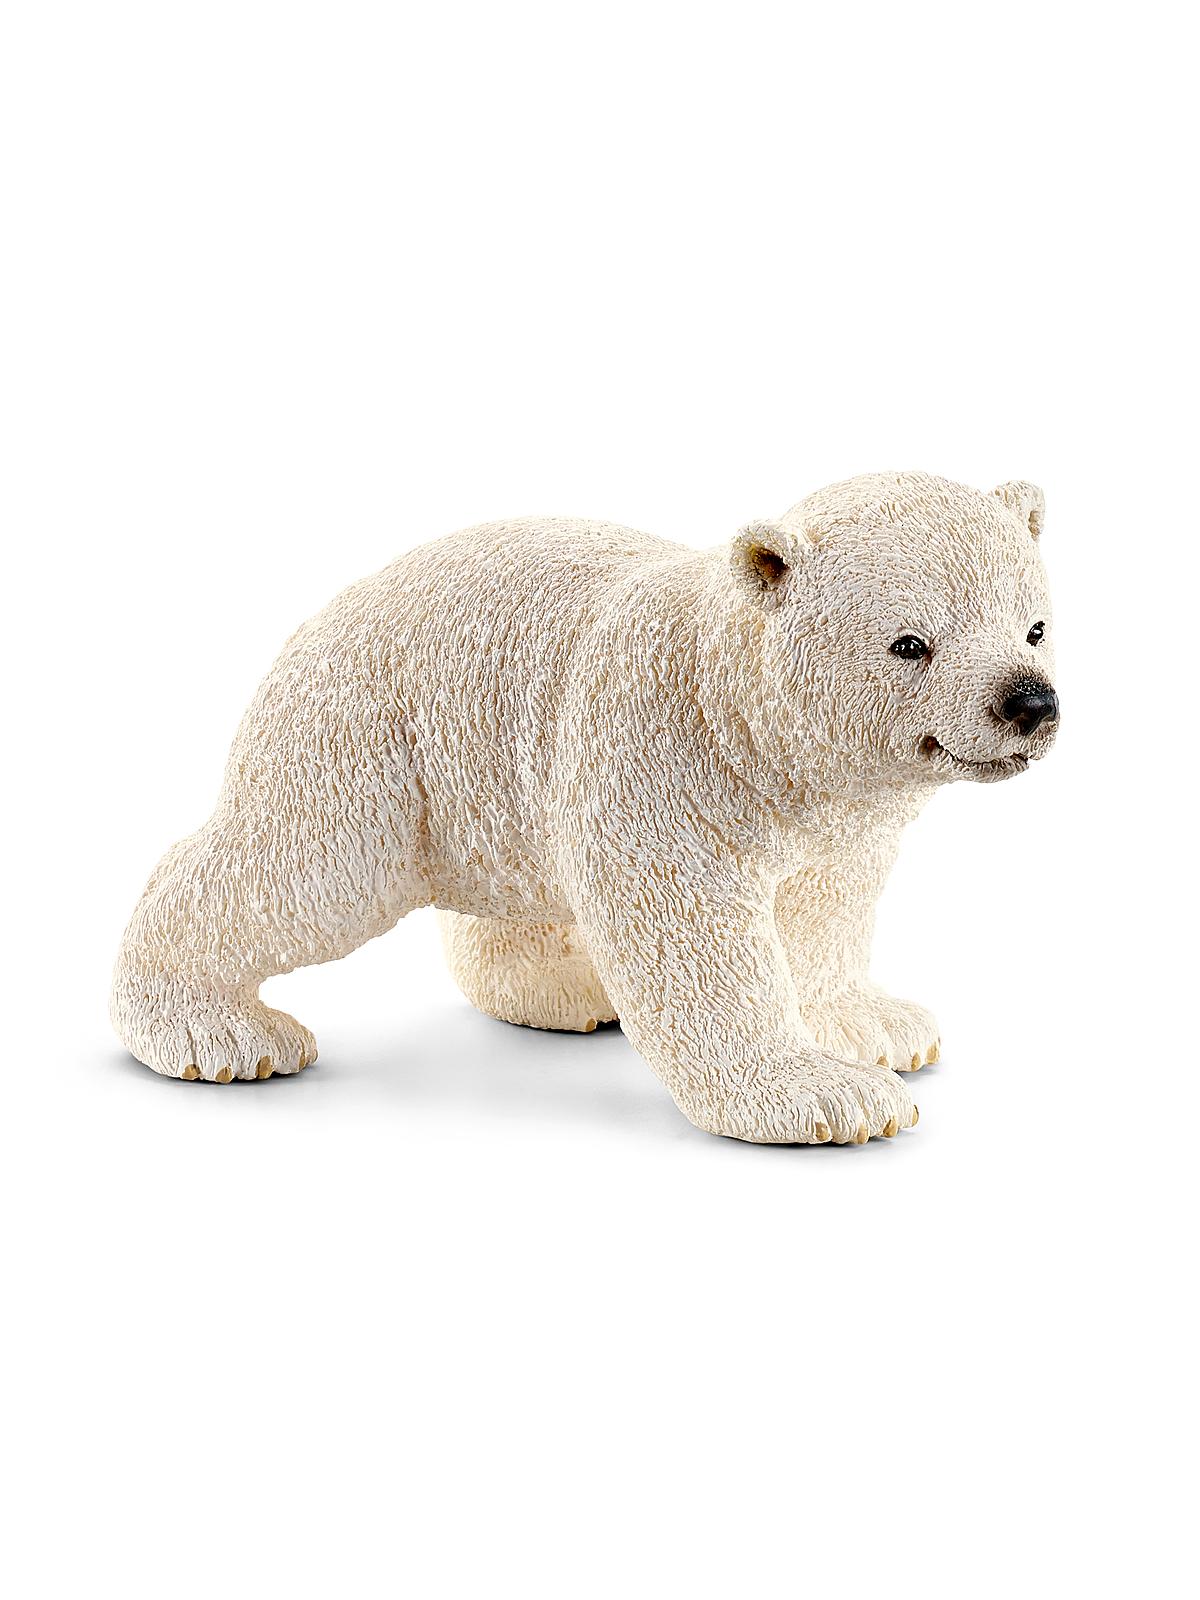 Polar Bear Cub, Walking